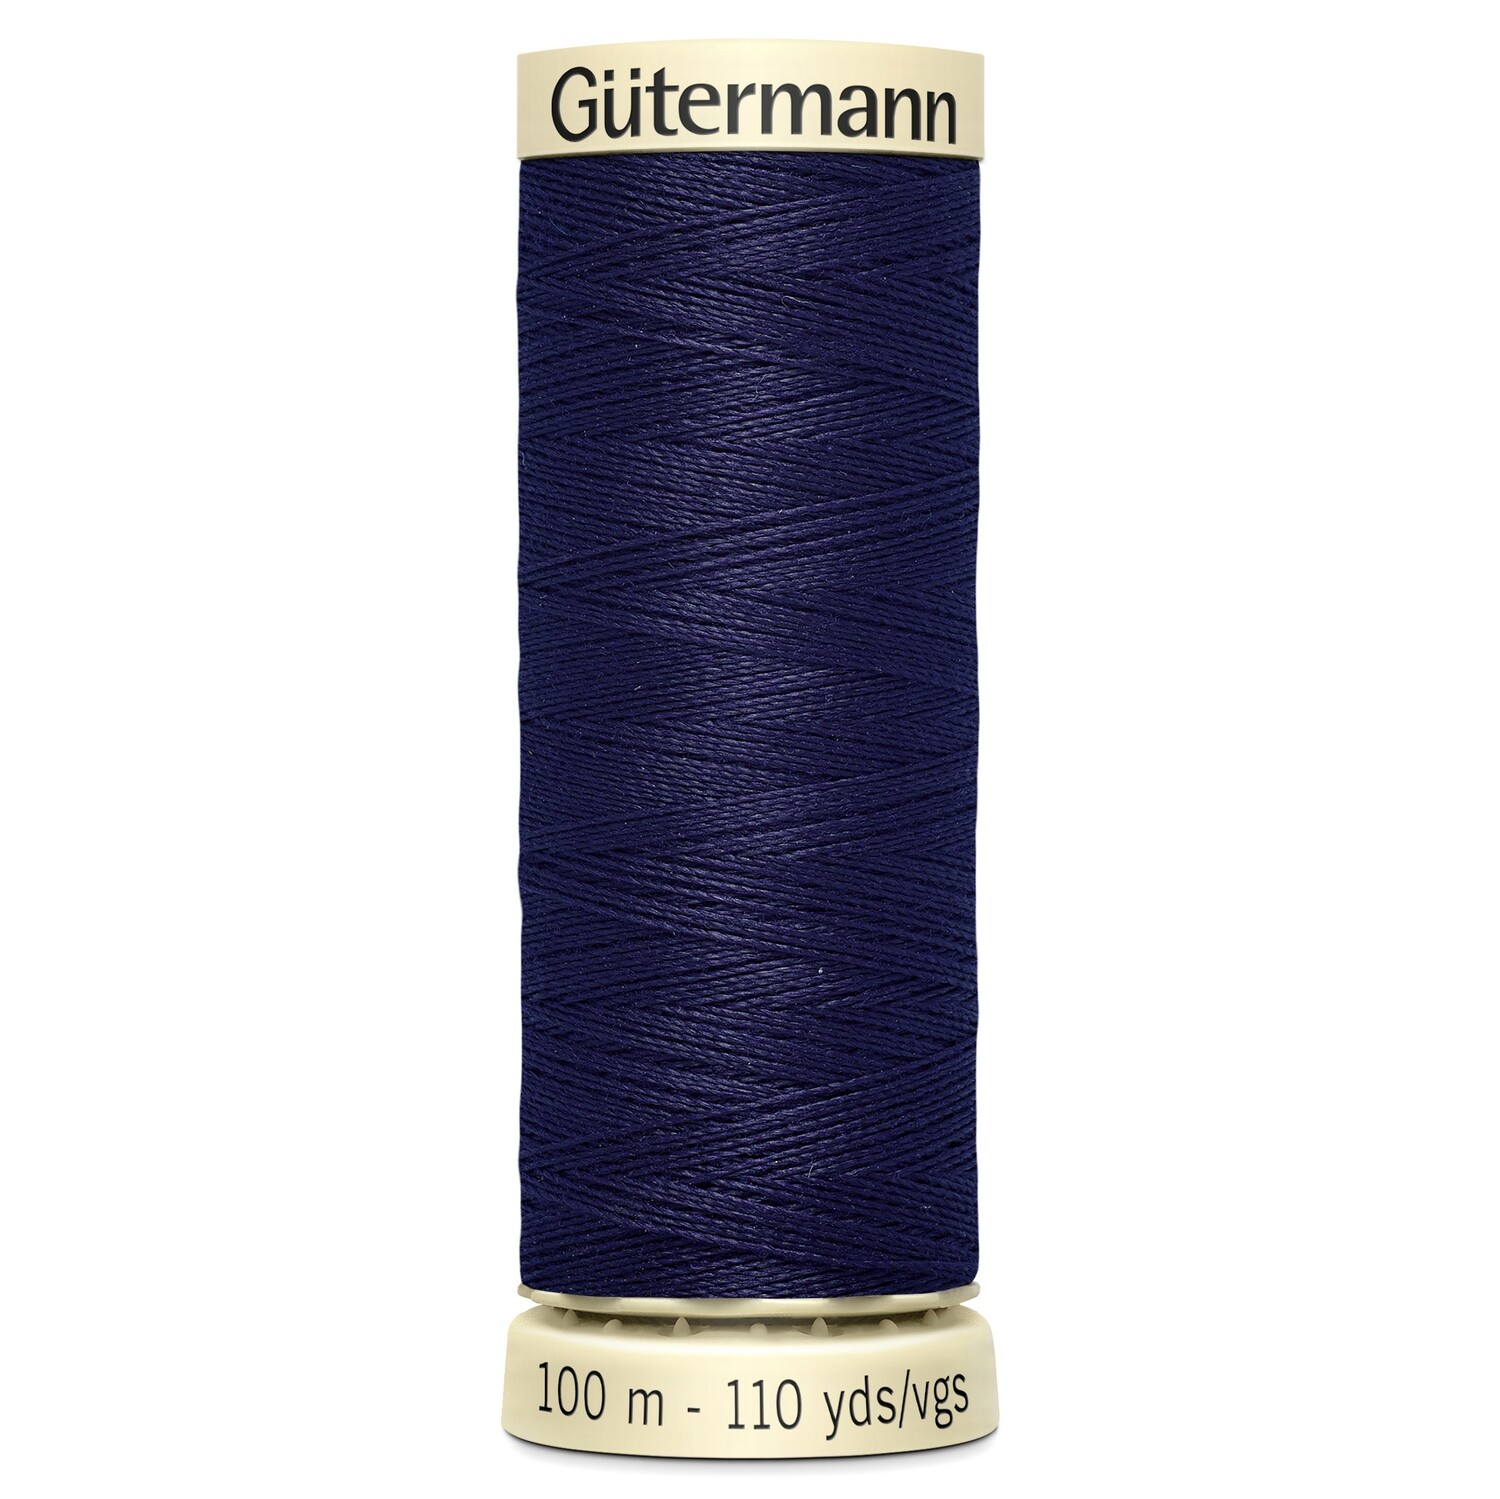 Gutermann Sew-All thread 324